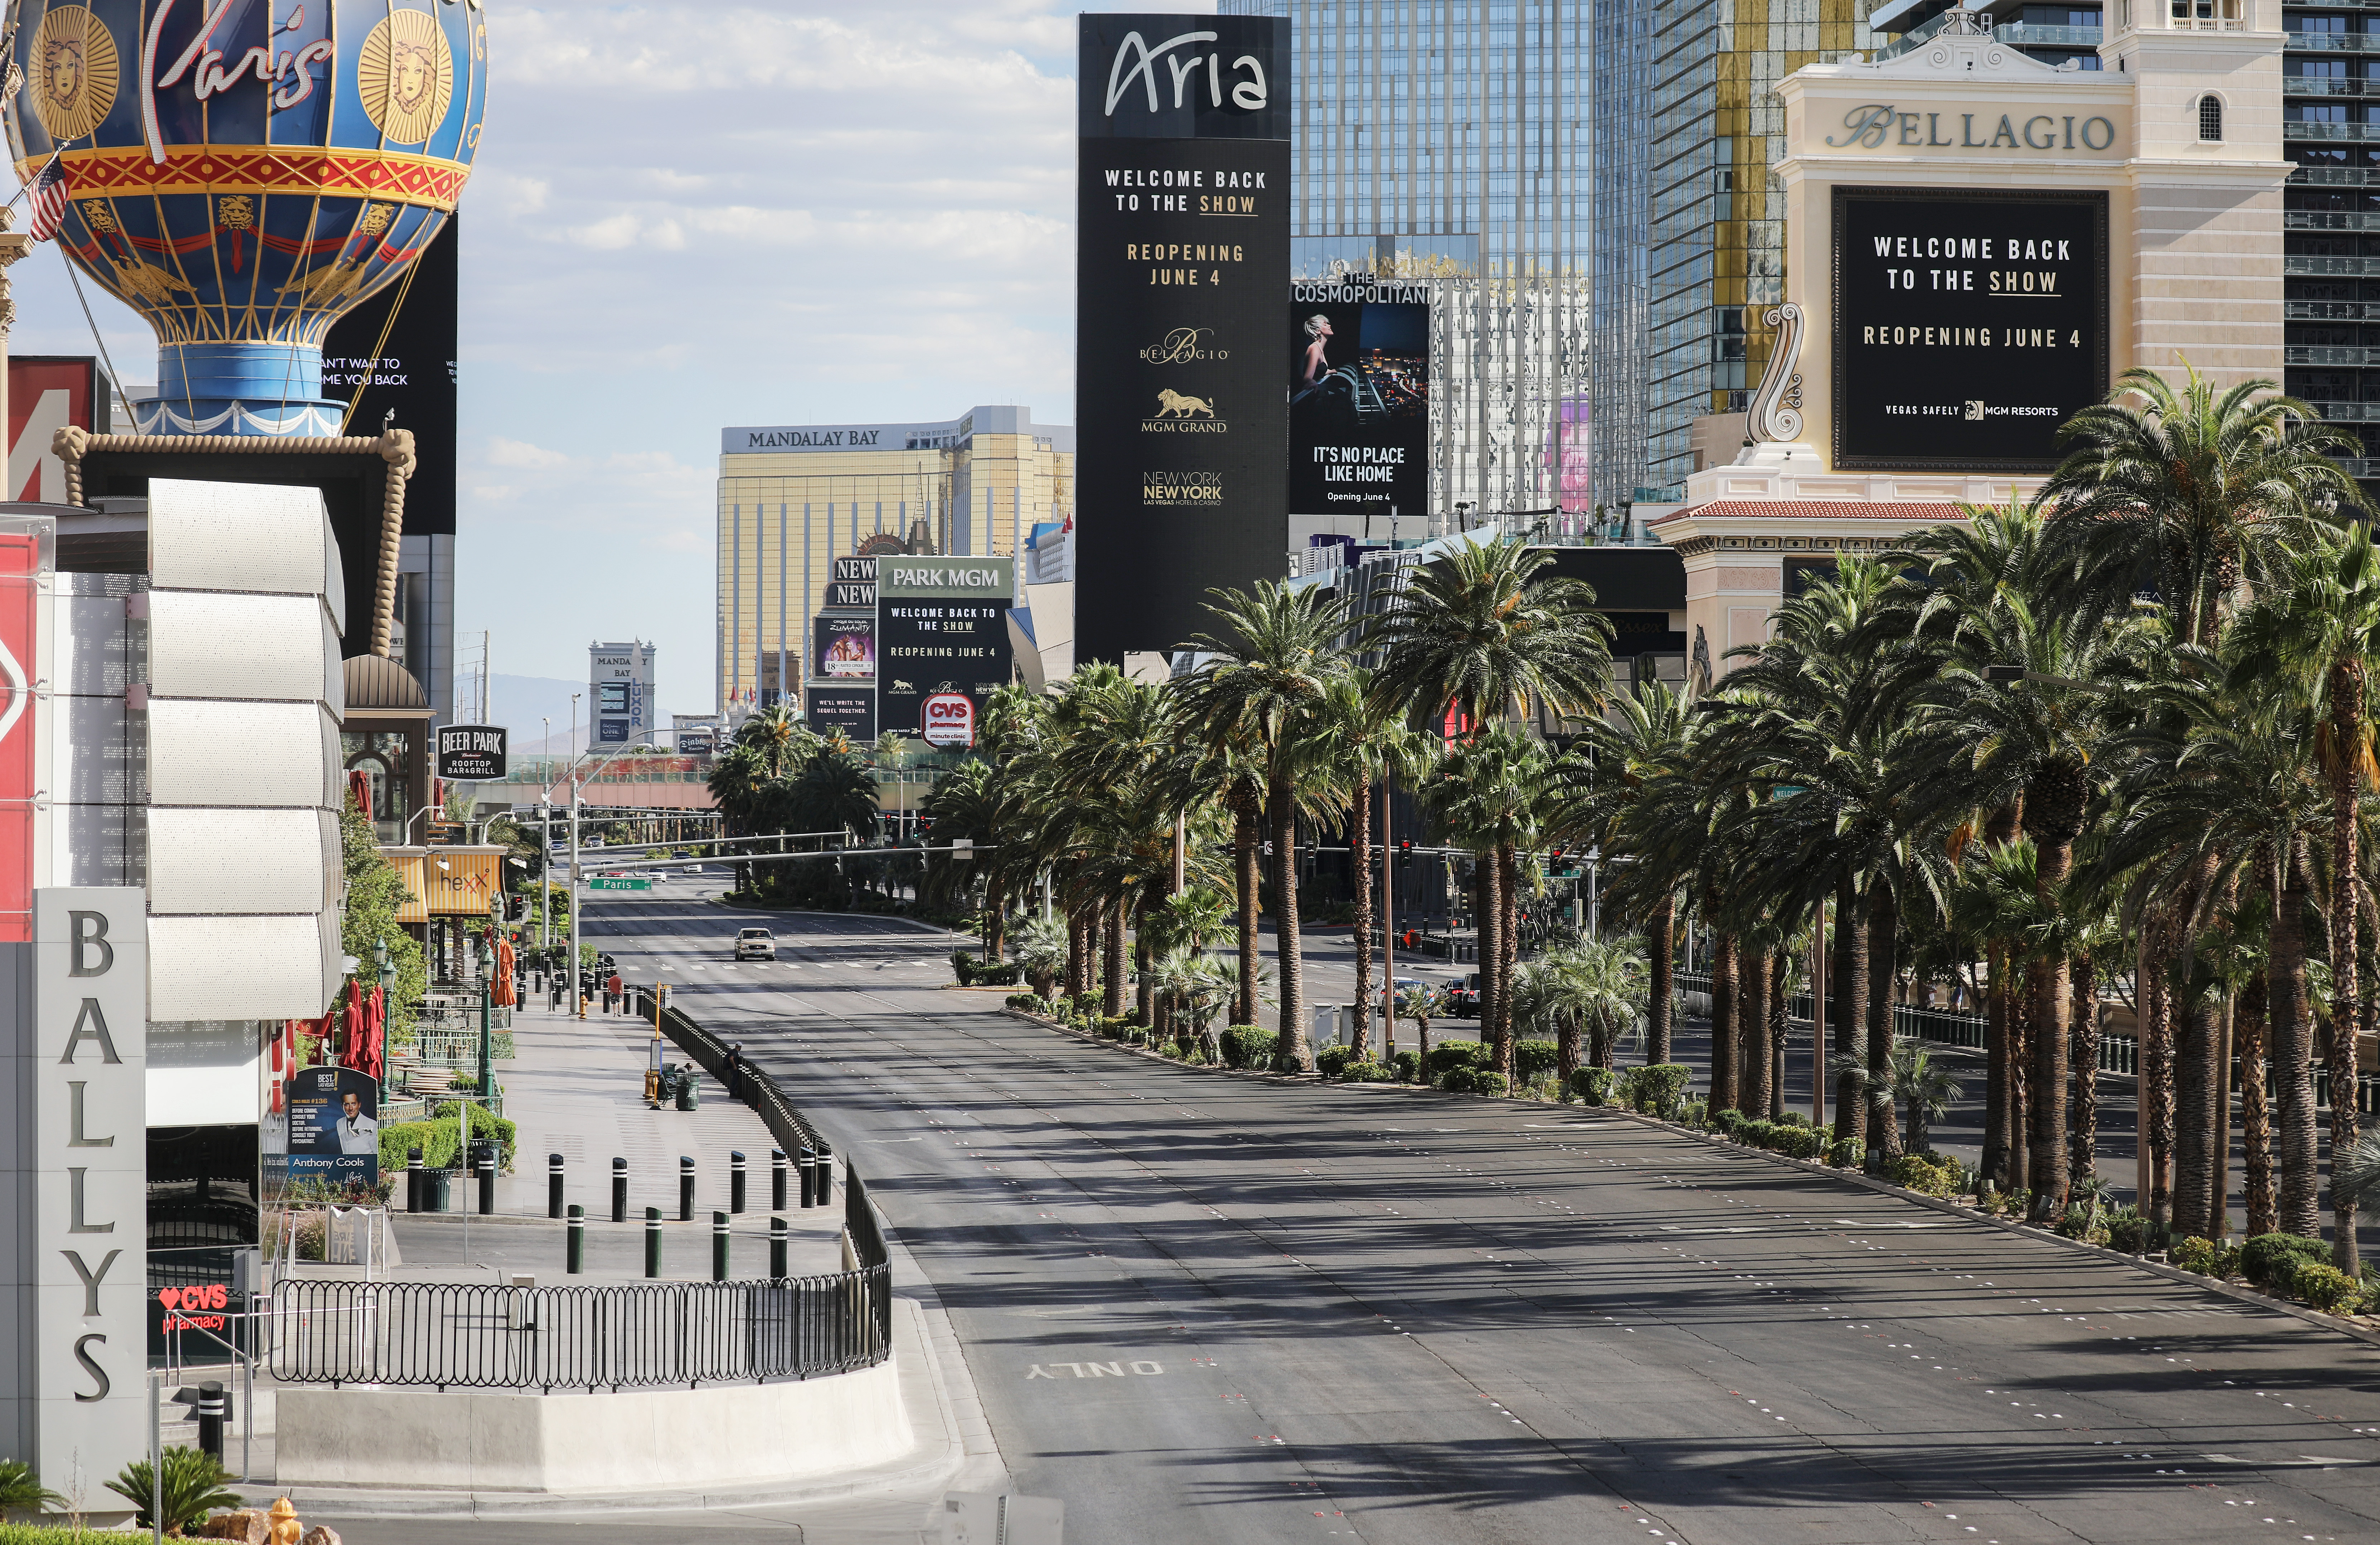 Las Vegas Sands Completes Sale Of U.S. Properties